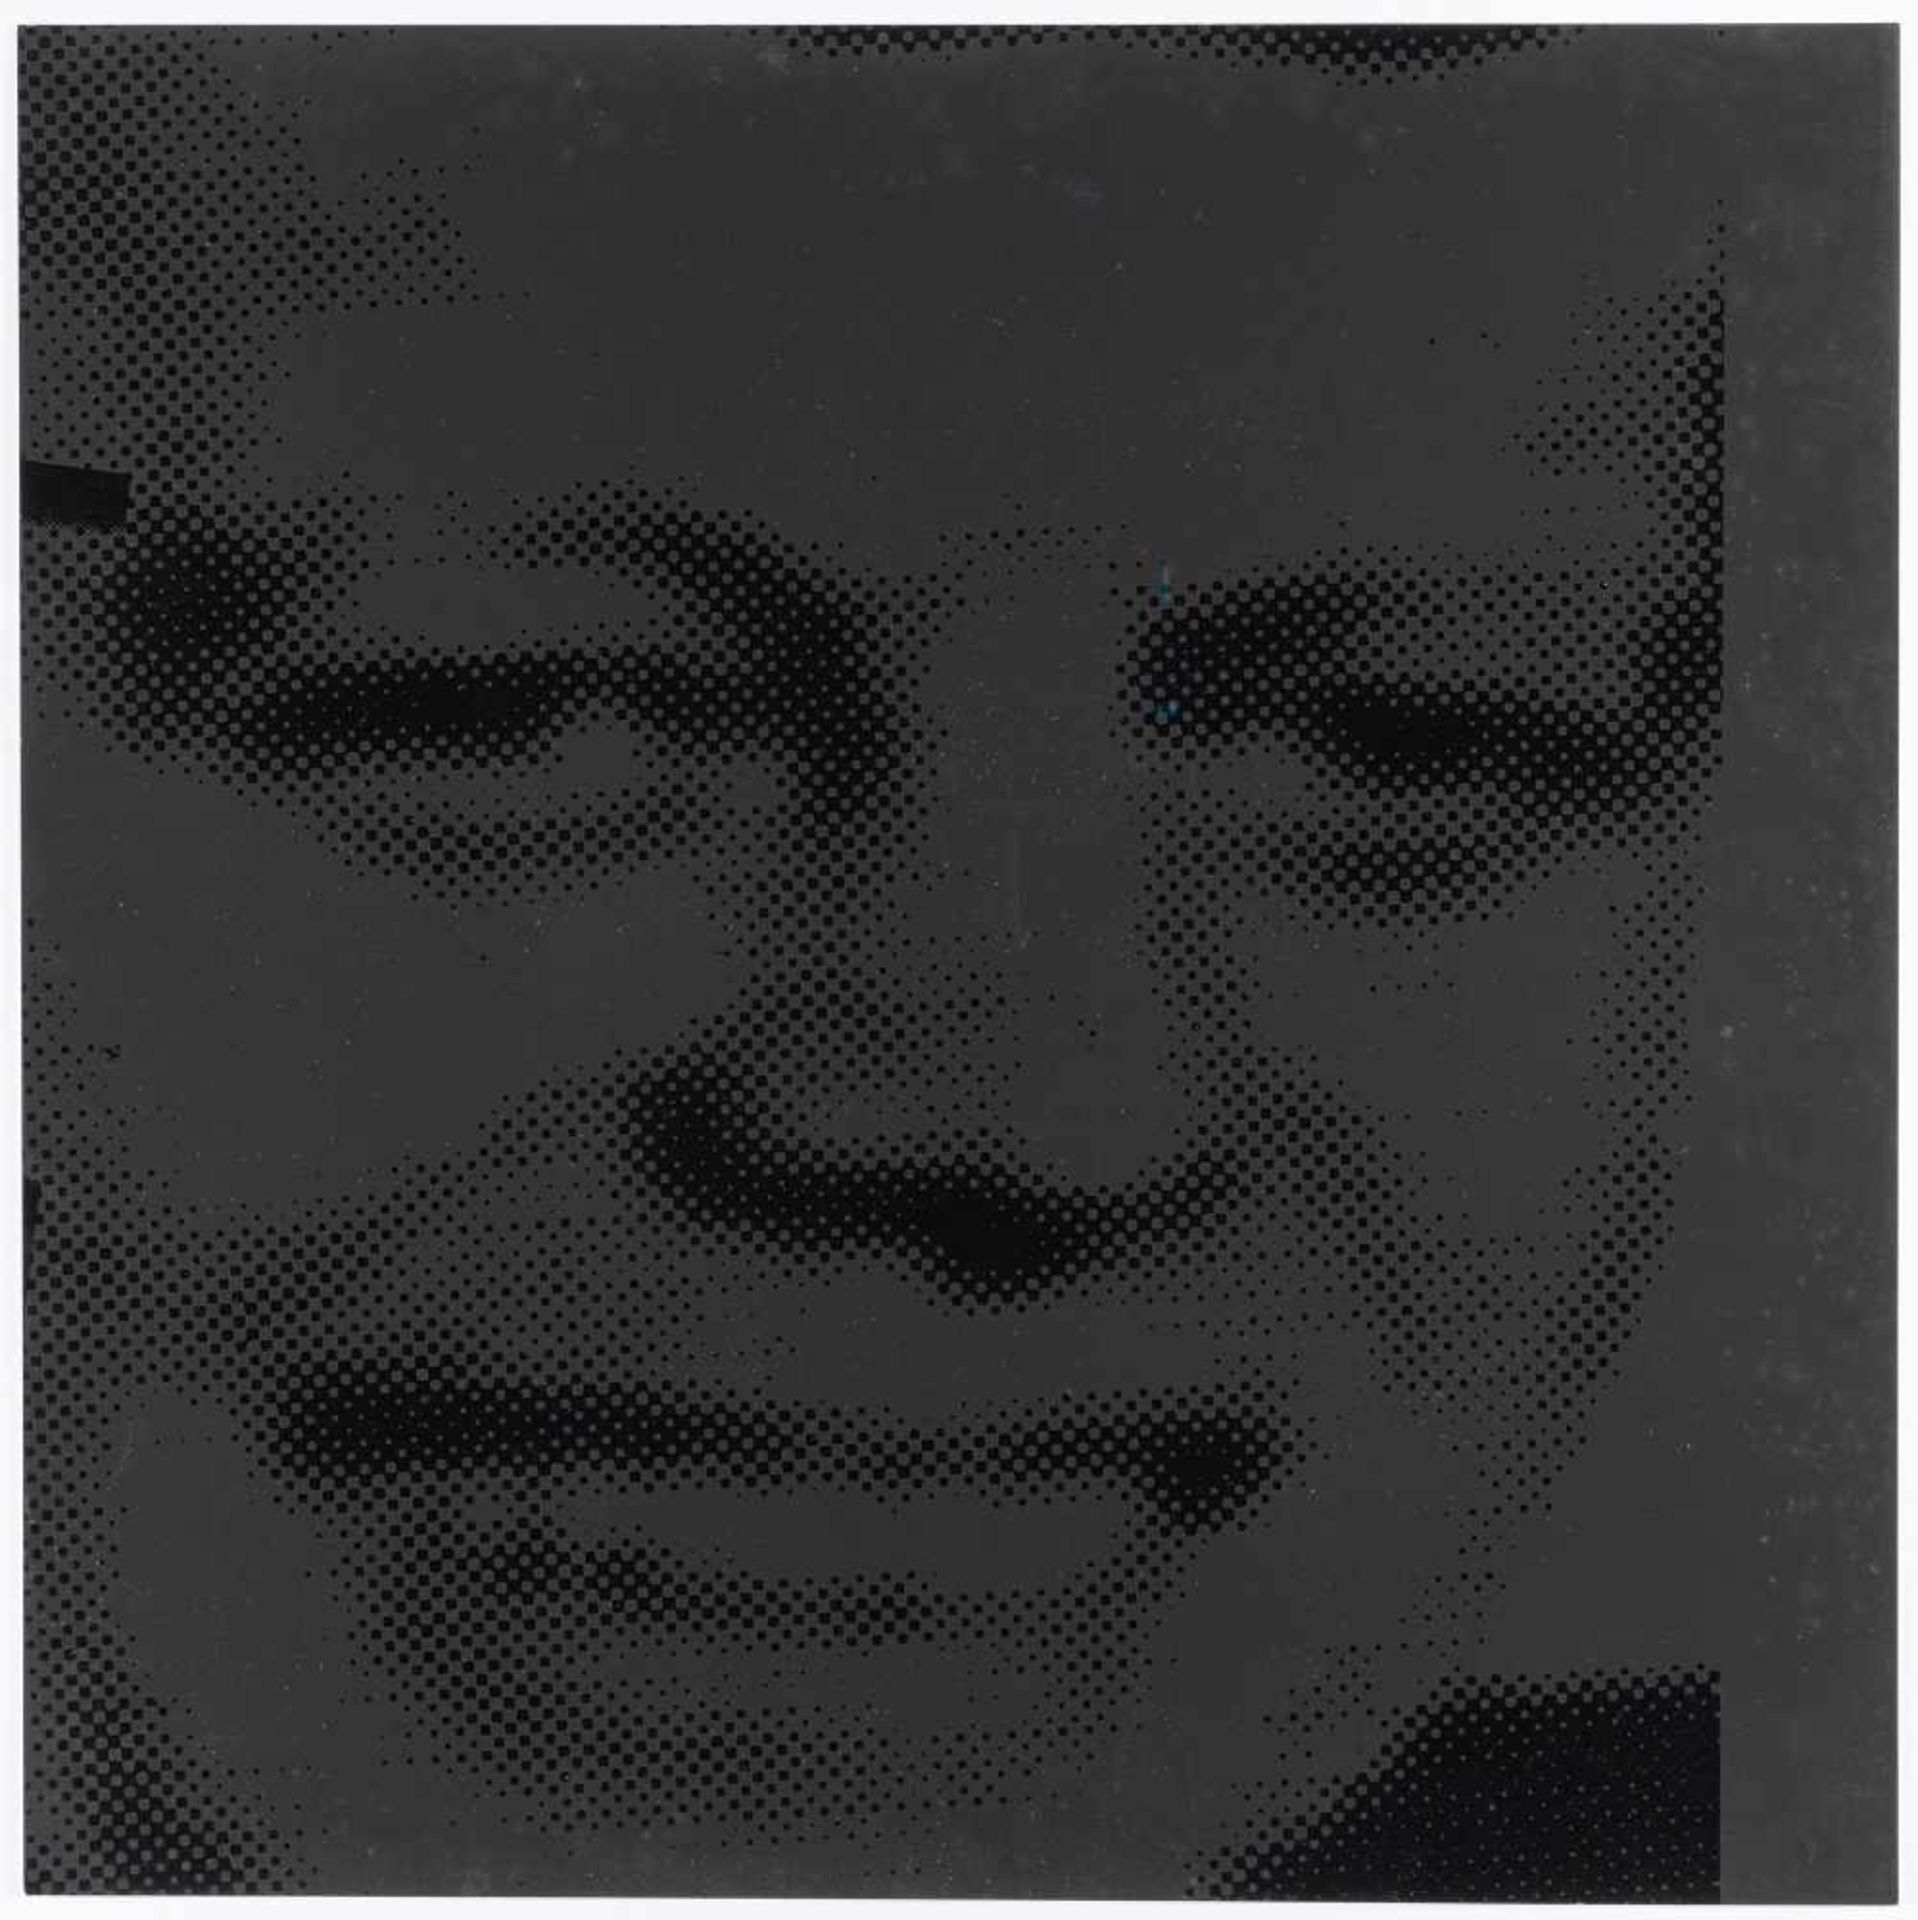 Andy Warhol - Image 16 of 16